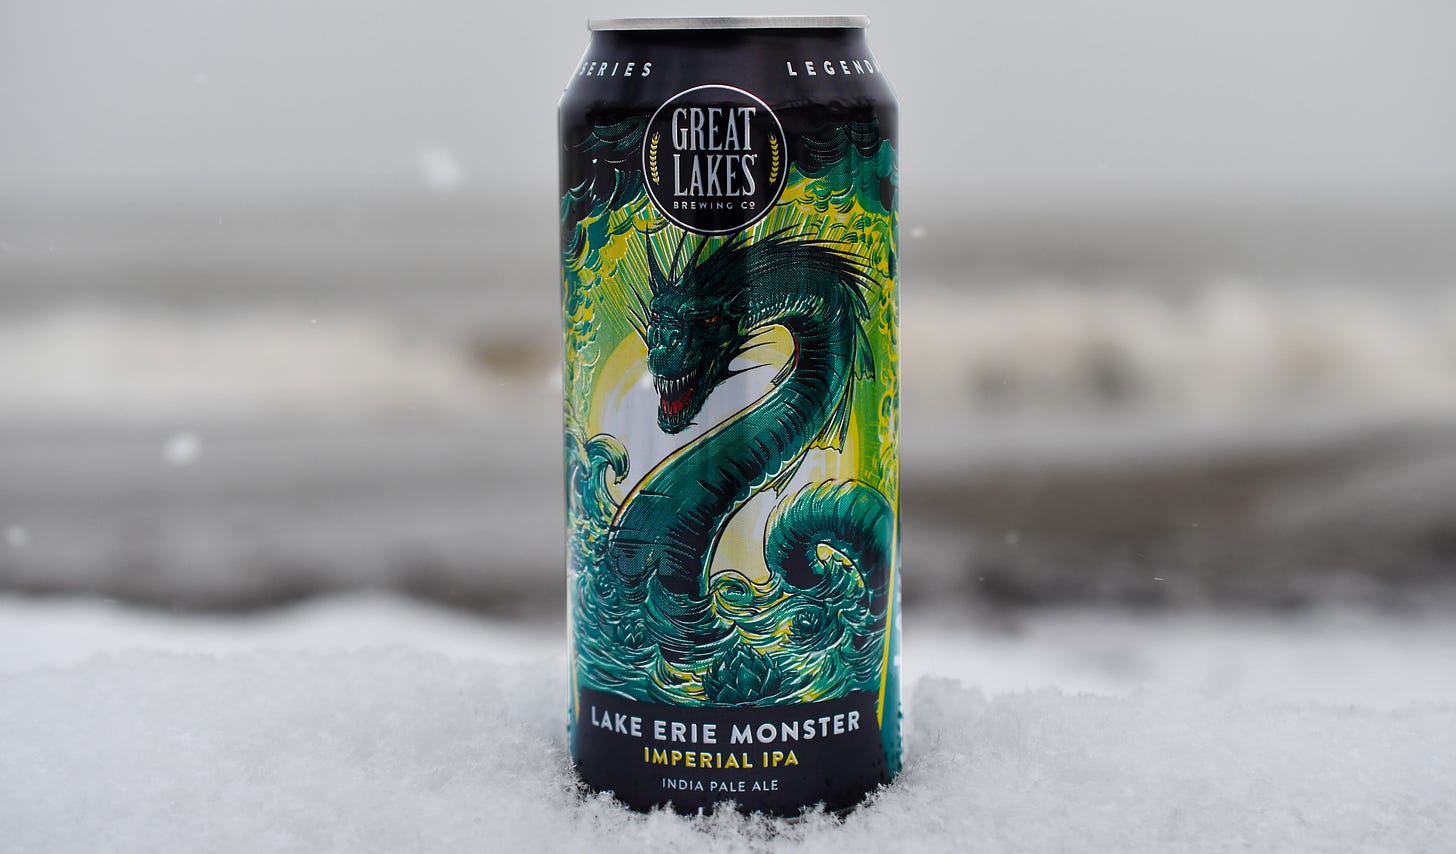 Image of Lake Erie Monster Imperial IPA beer.